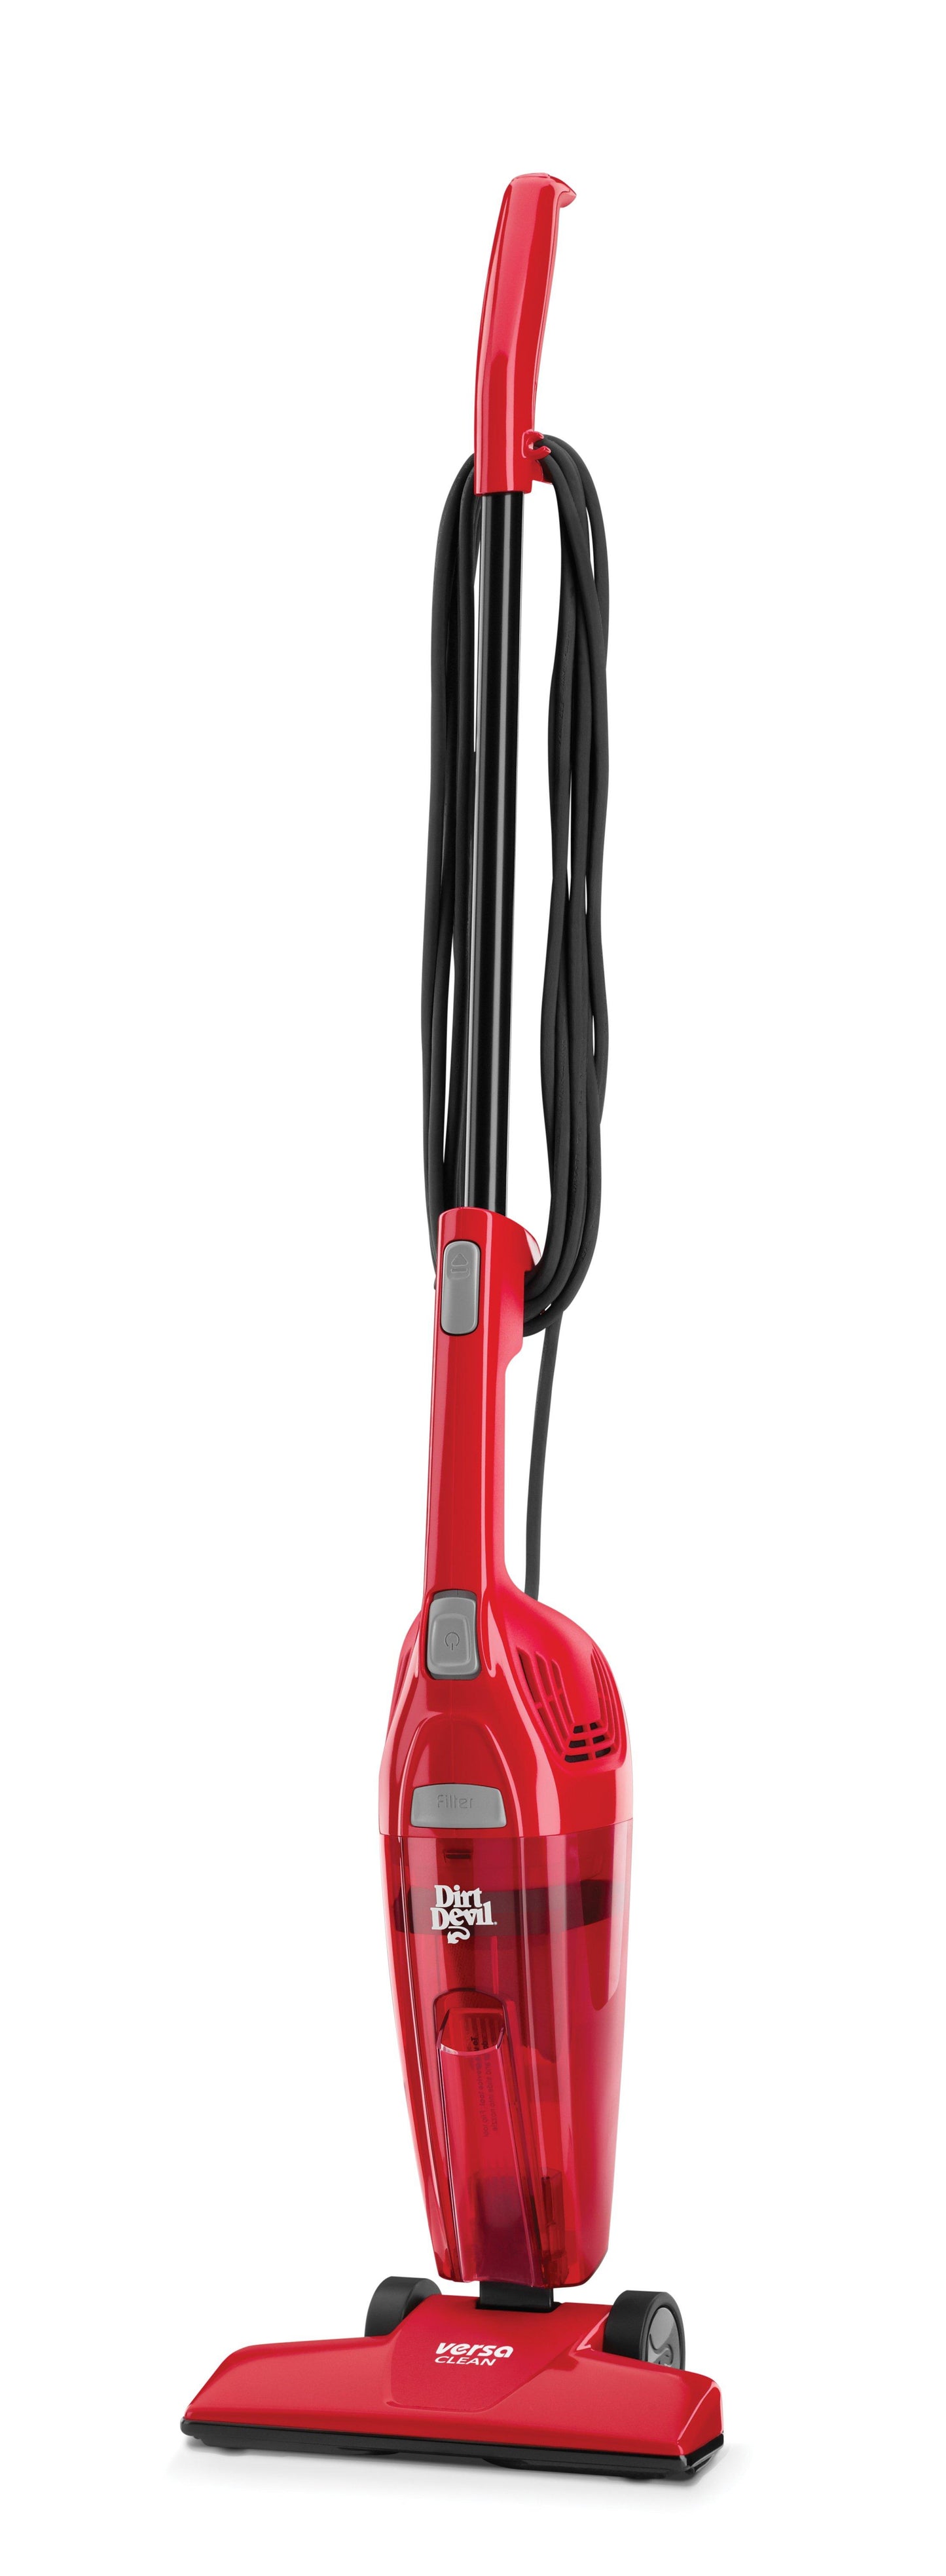 Versa Clean Corded Stick Vacuum